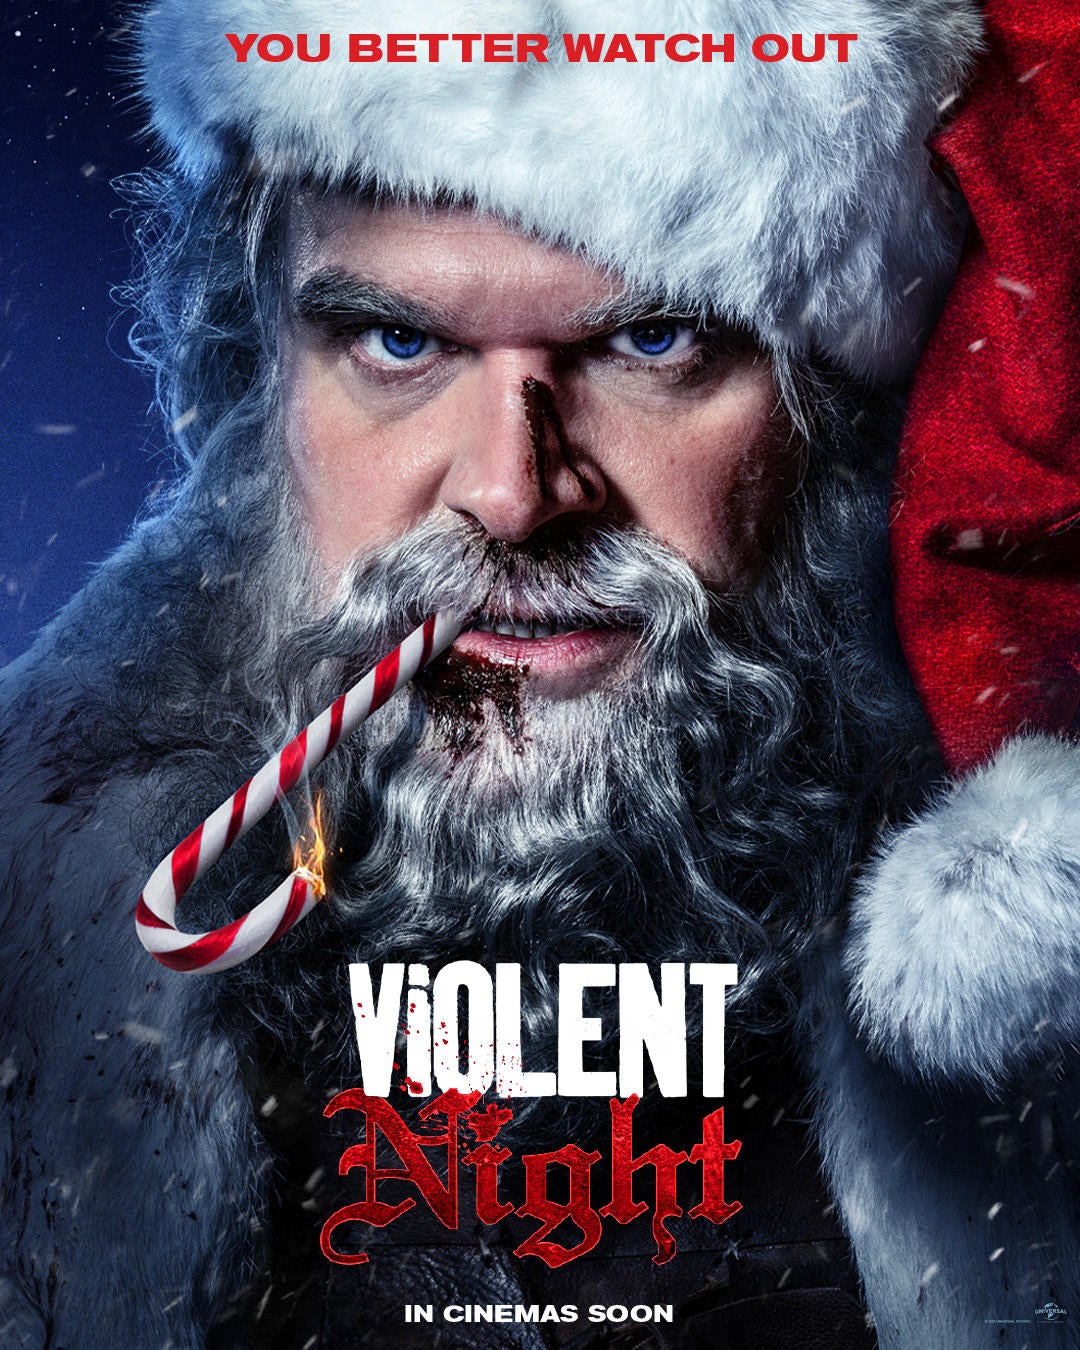 david-harbour-violent-night-movie-poster-santa-claus.jpg